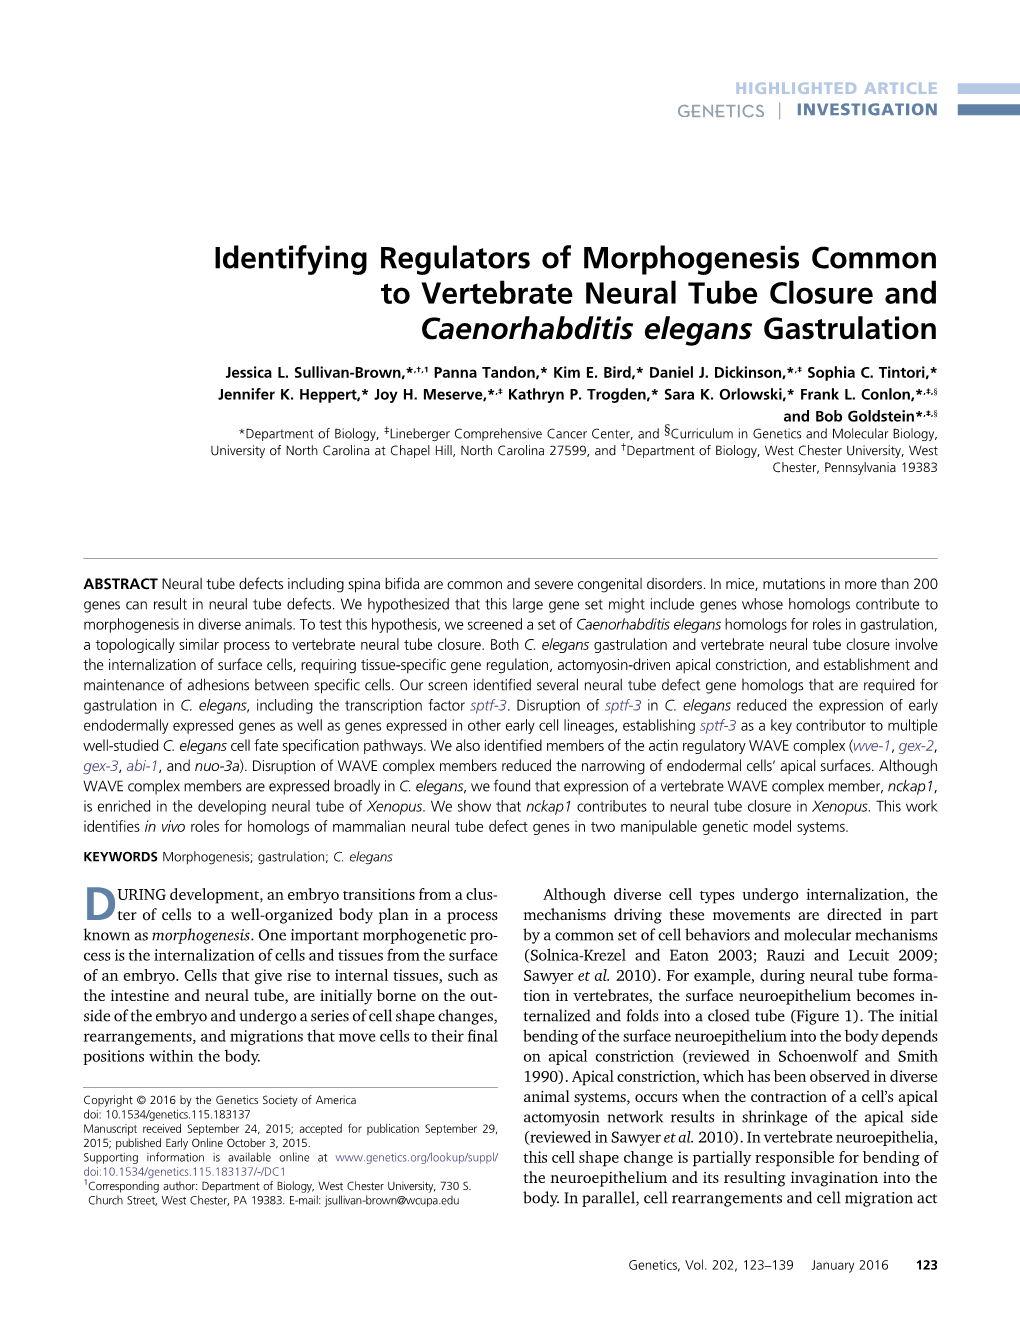 Identifying Regulators of Morphogenesis Common to Vertebrate Neural Tube Closure and Caenorhabditis Elegans Gastrulation